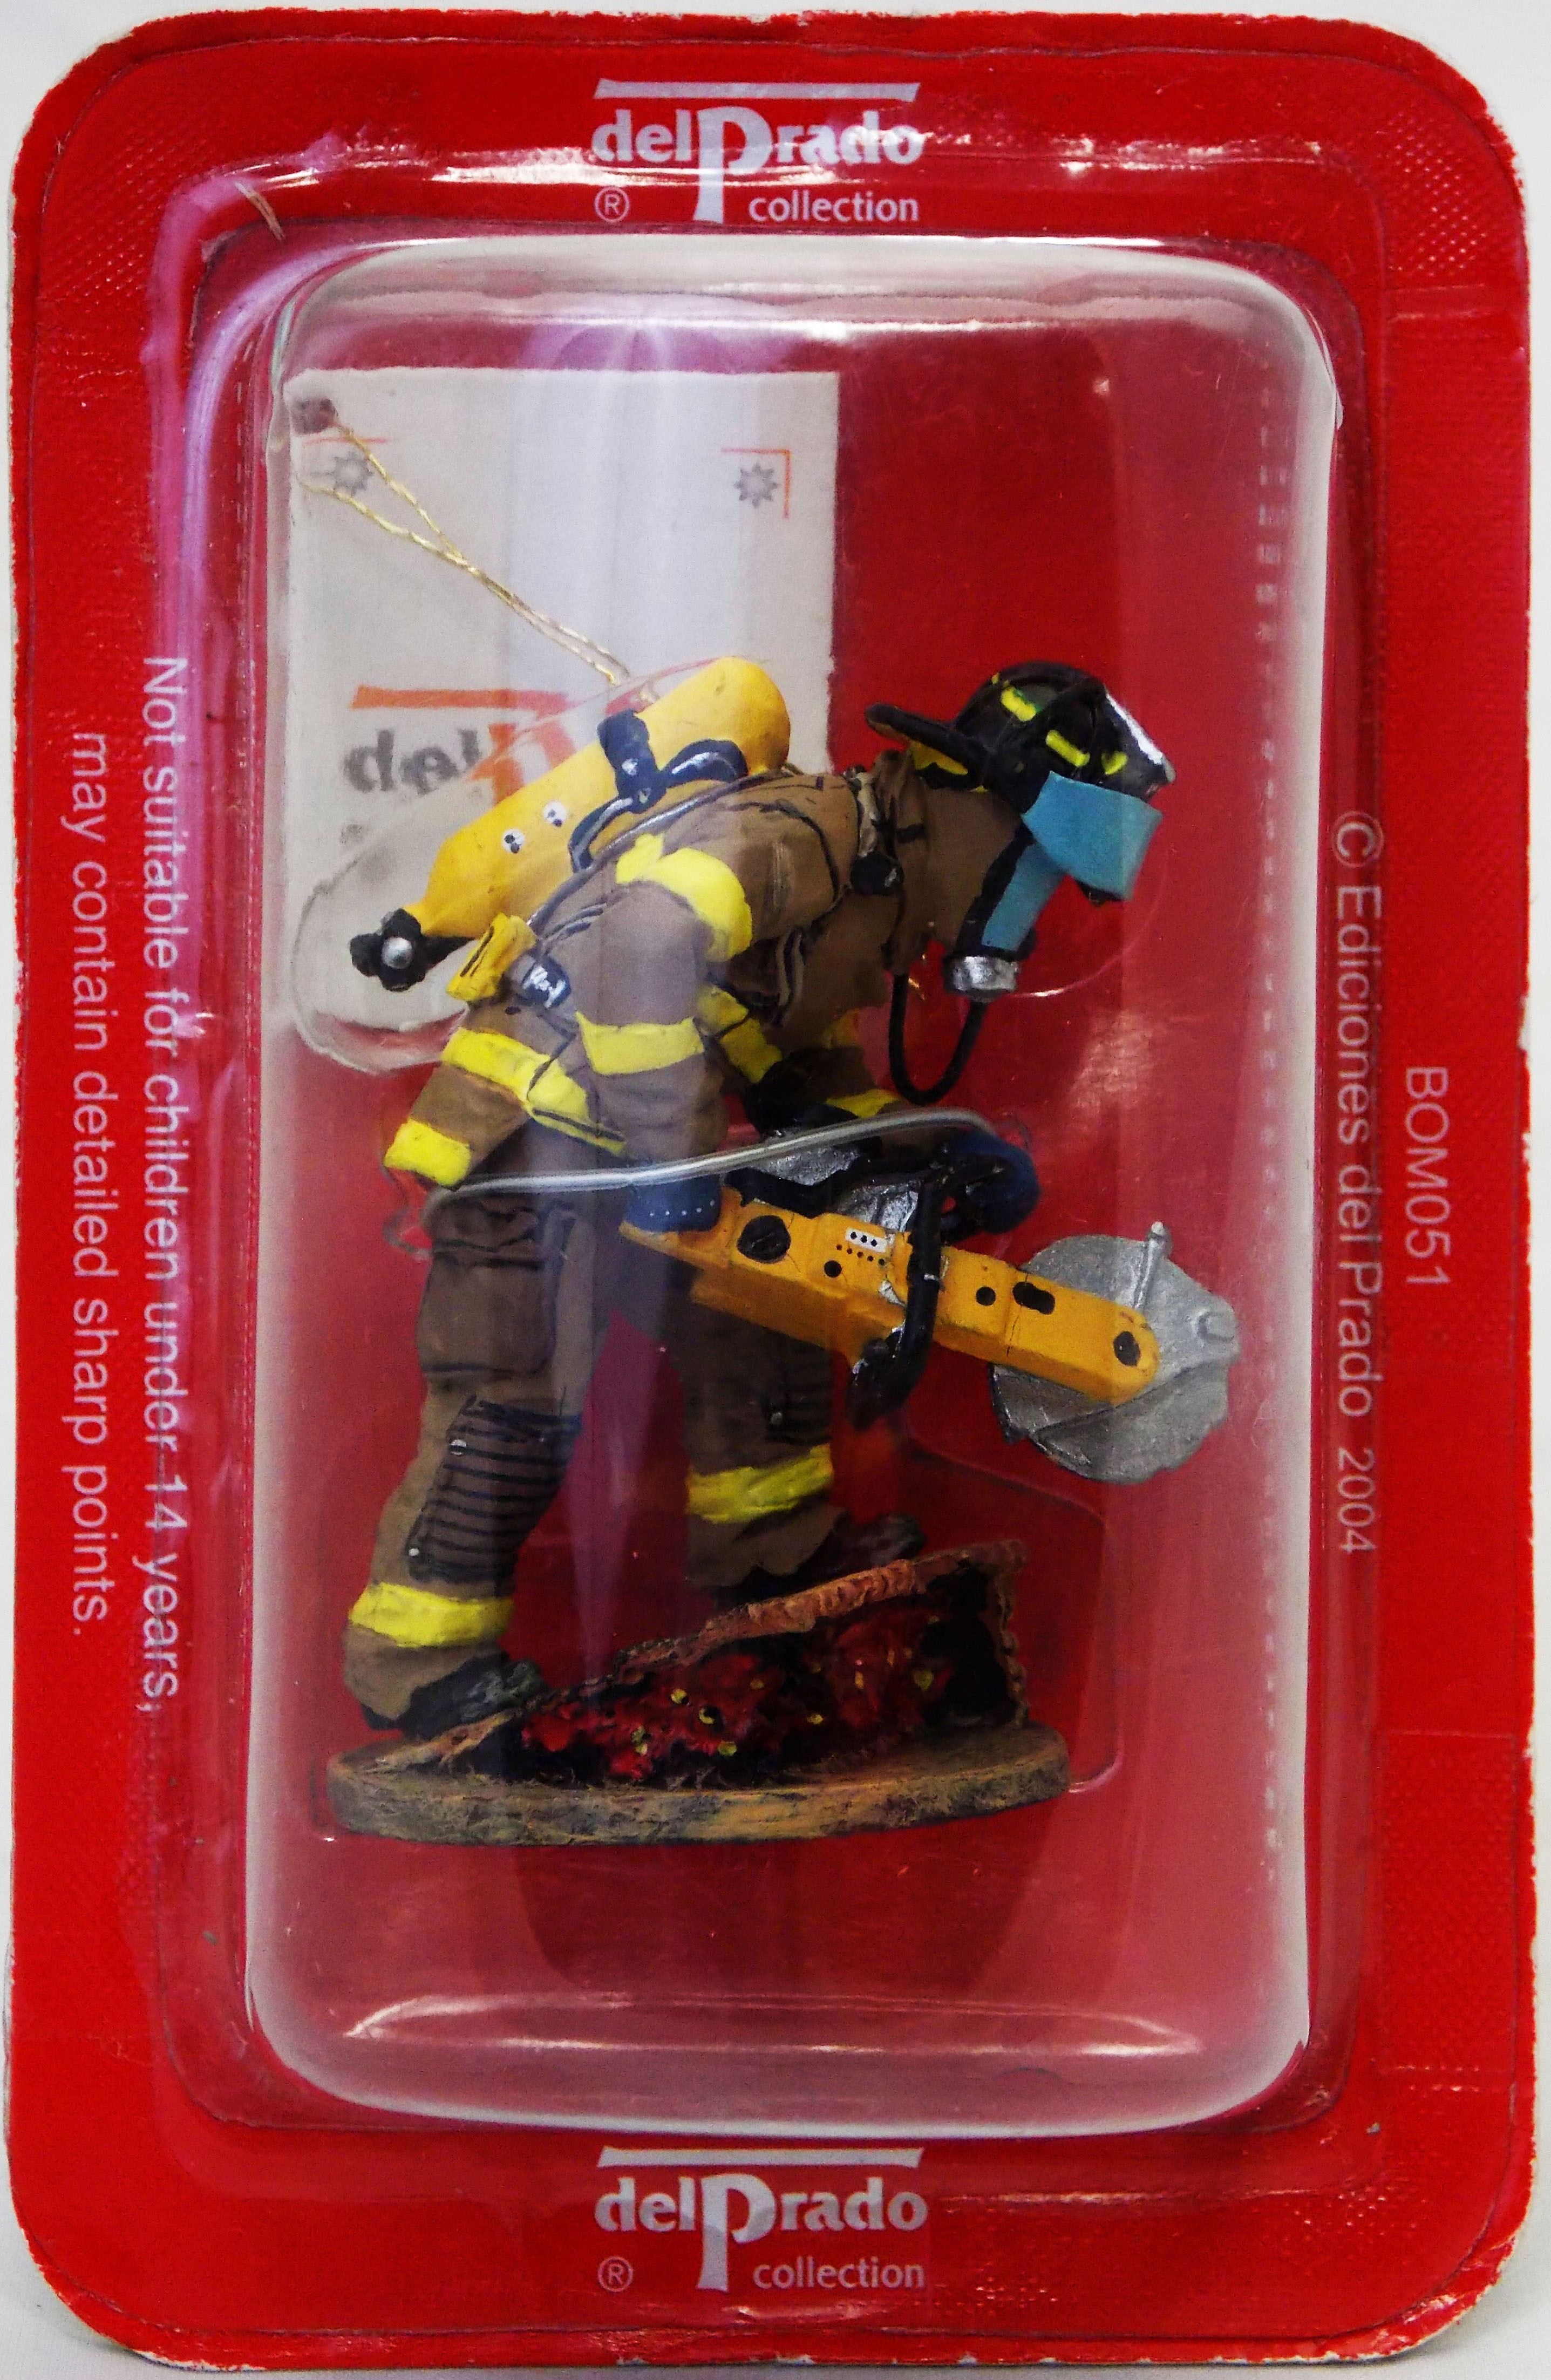 Firefighter Figurine Fireman Tokyo Japan 1995 Metal Del Prado 1/32 2.75" 